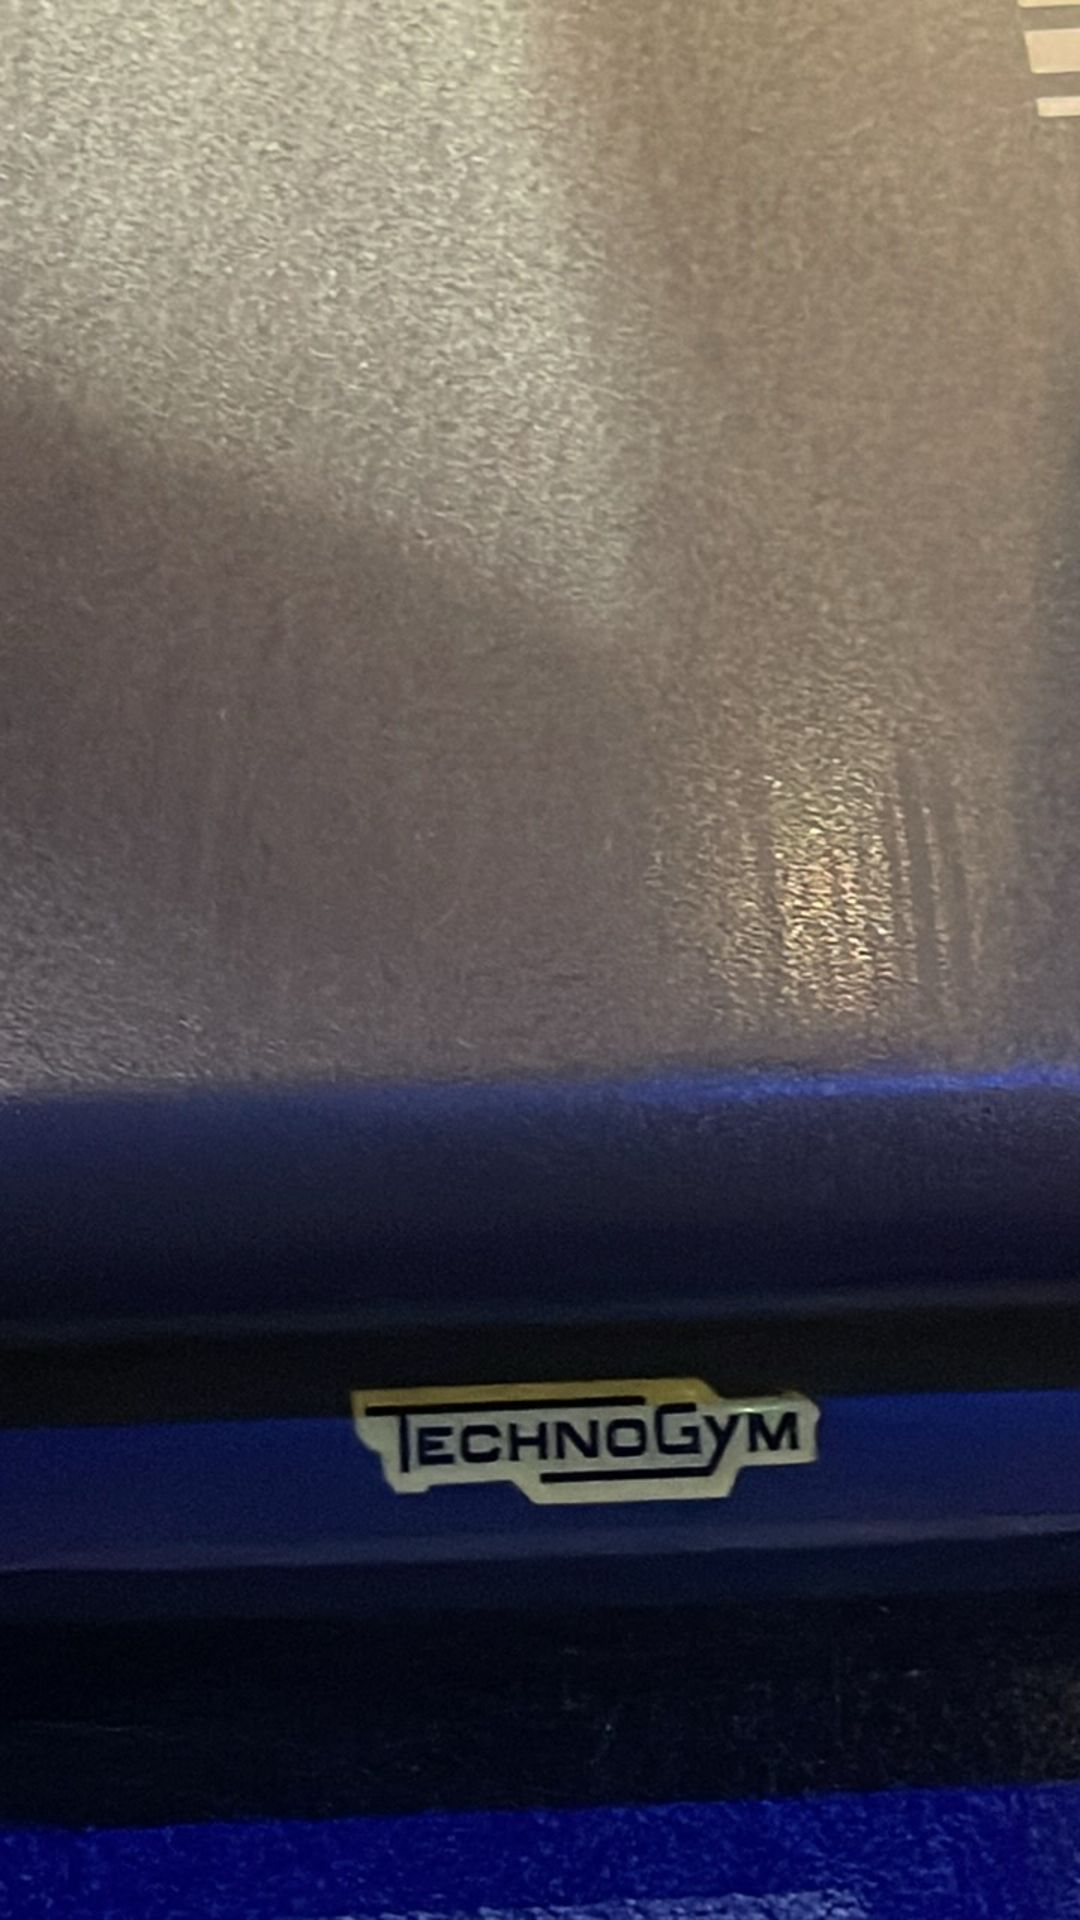 Technogym Treadmill 1000 - Image 3 of 8